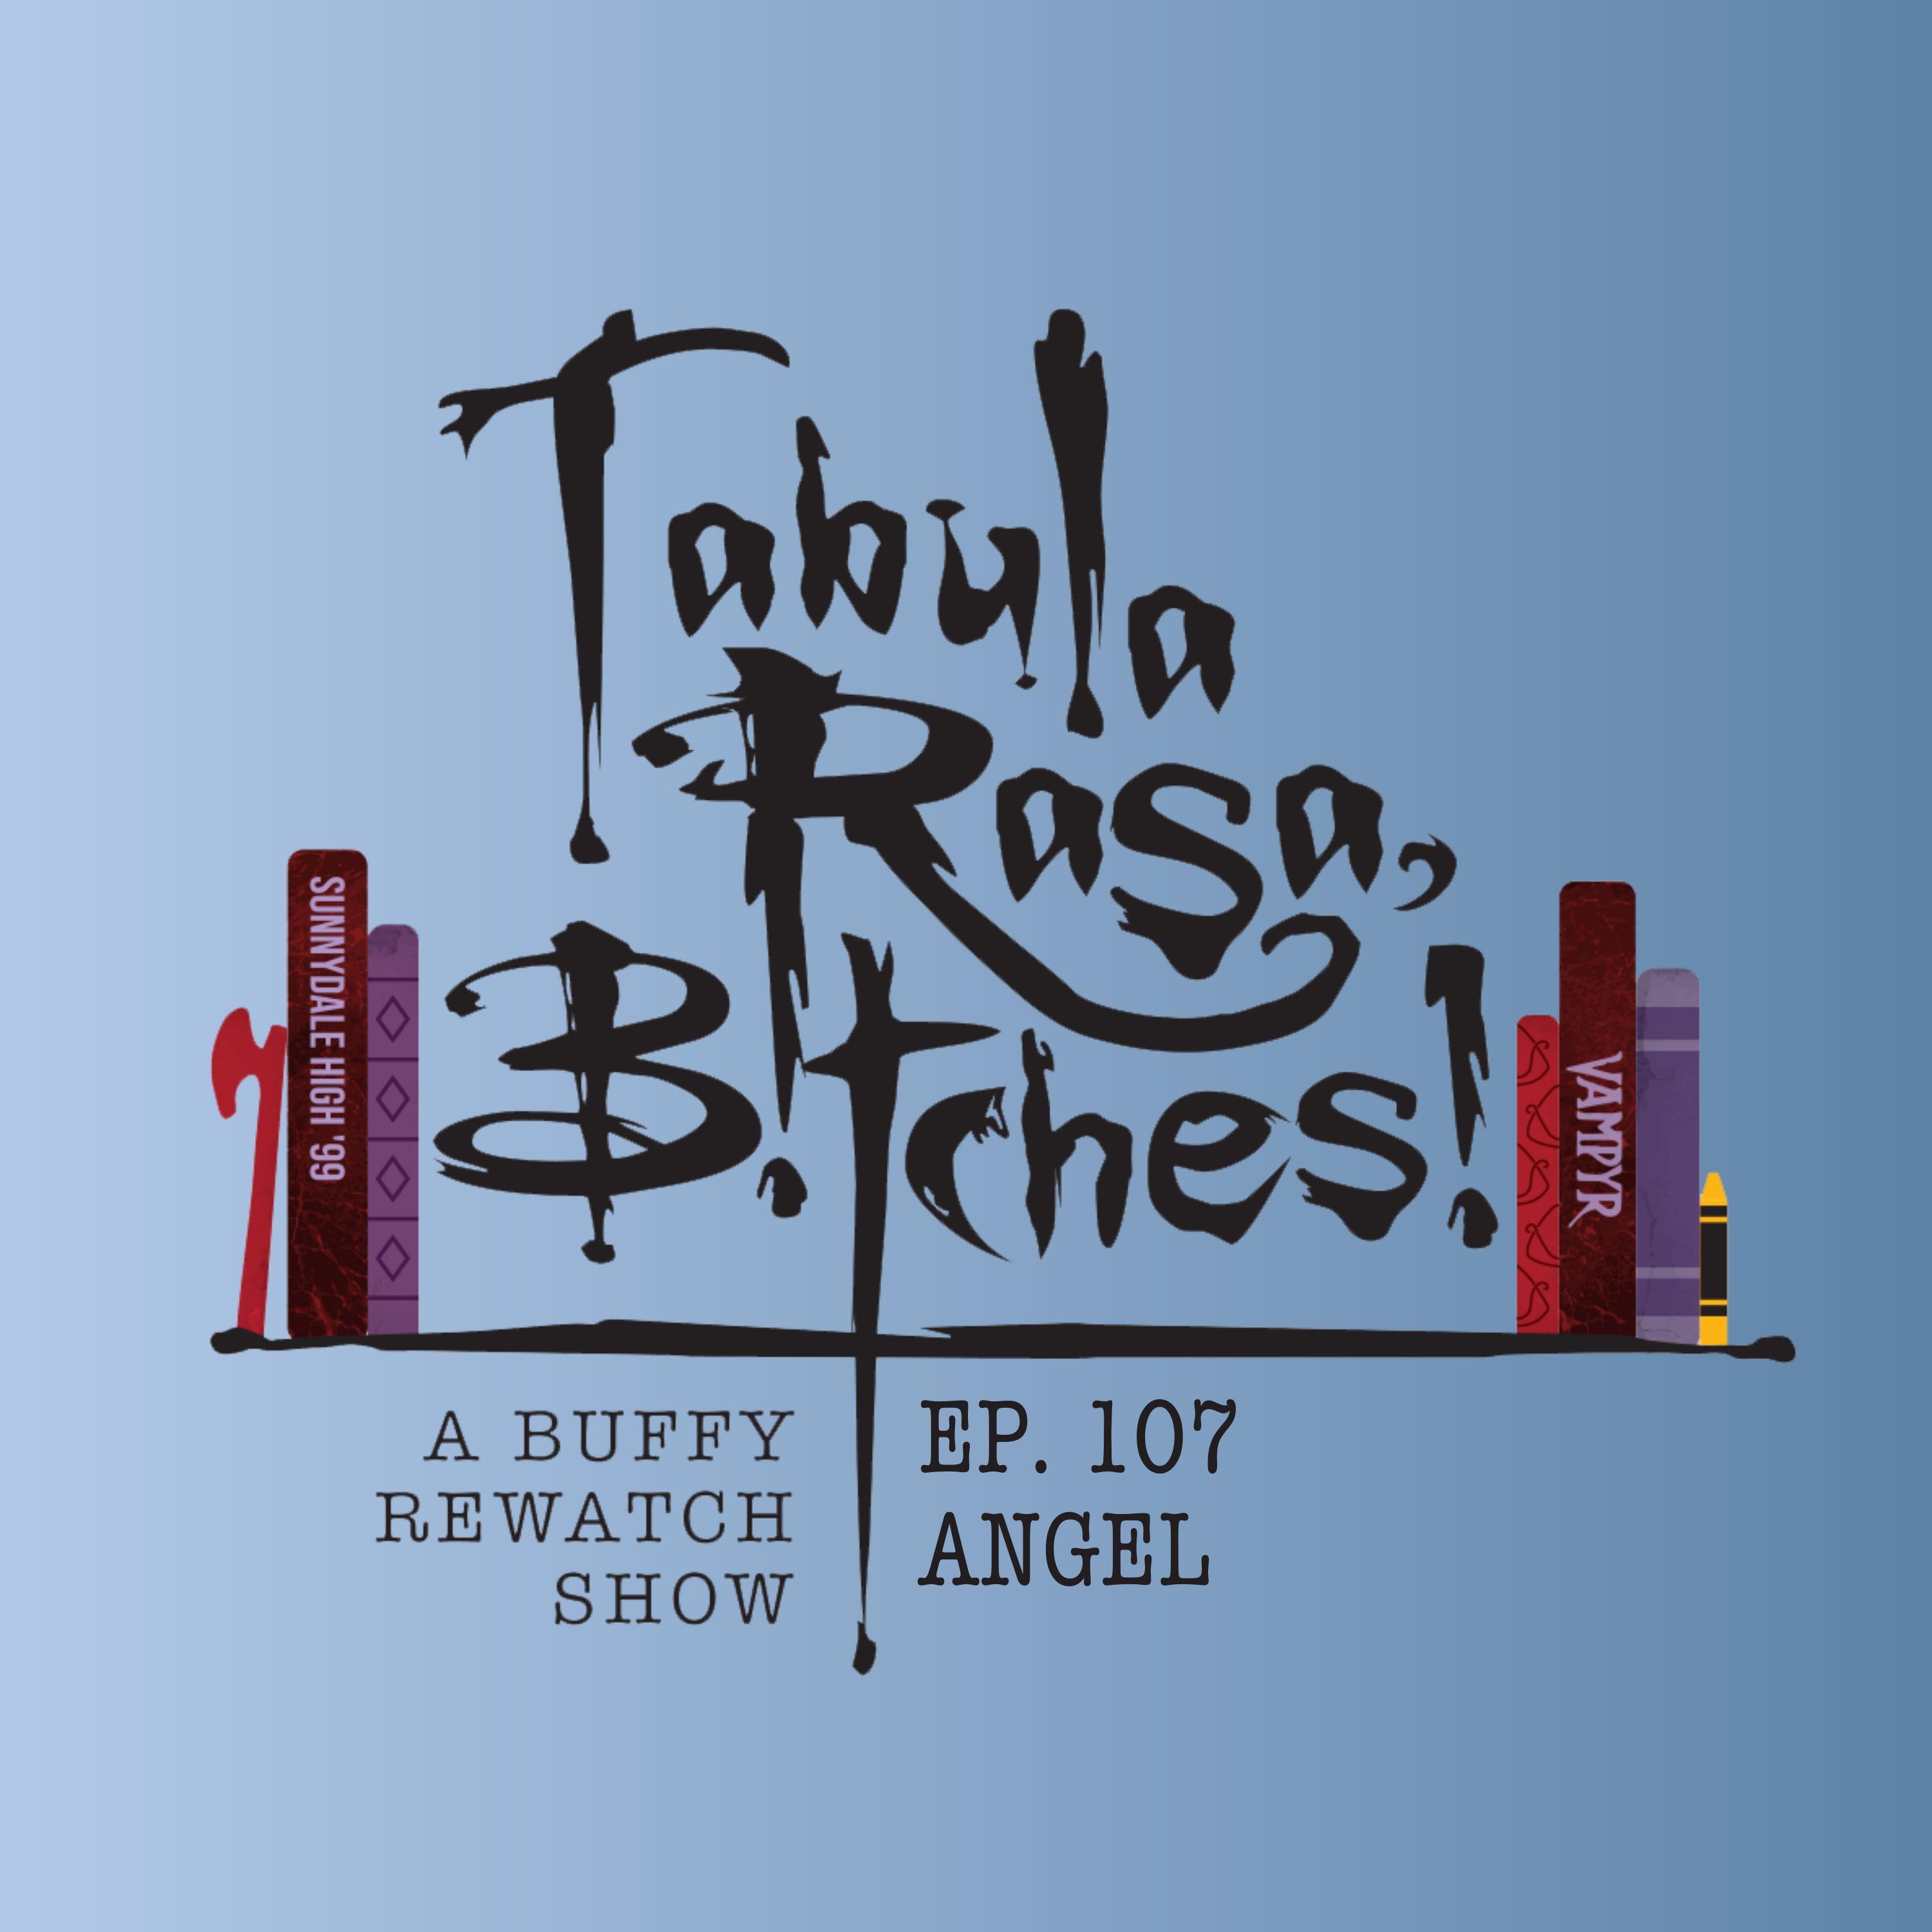 Artwork for podcast Tabula Rasa, B!tches!: A Buffy Rewatch Show